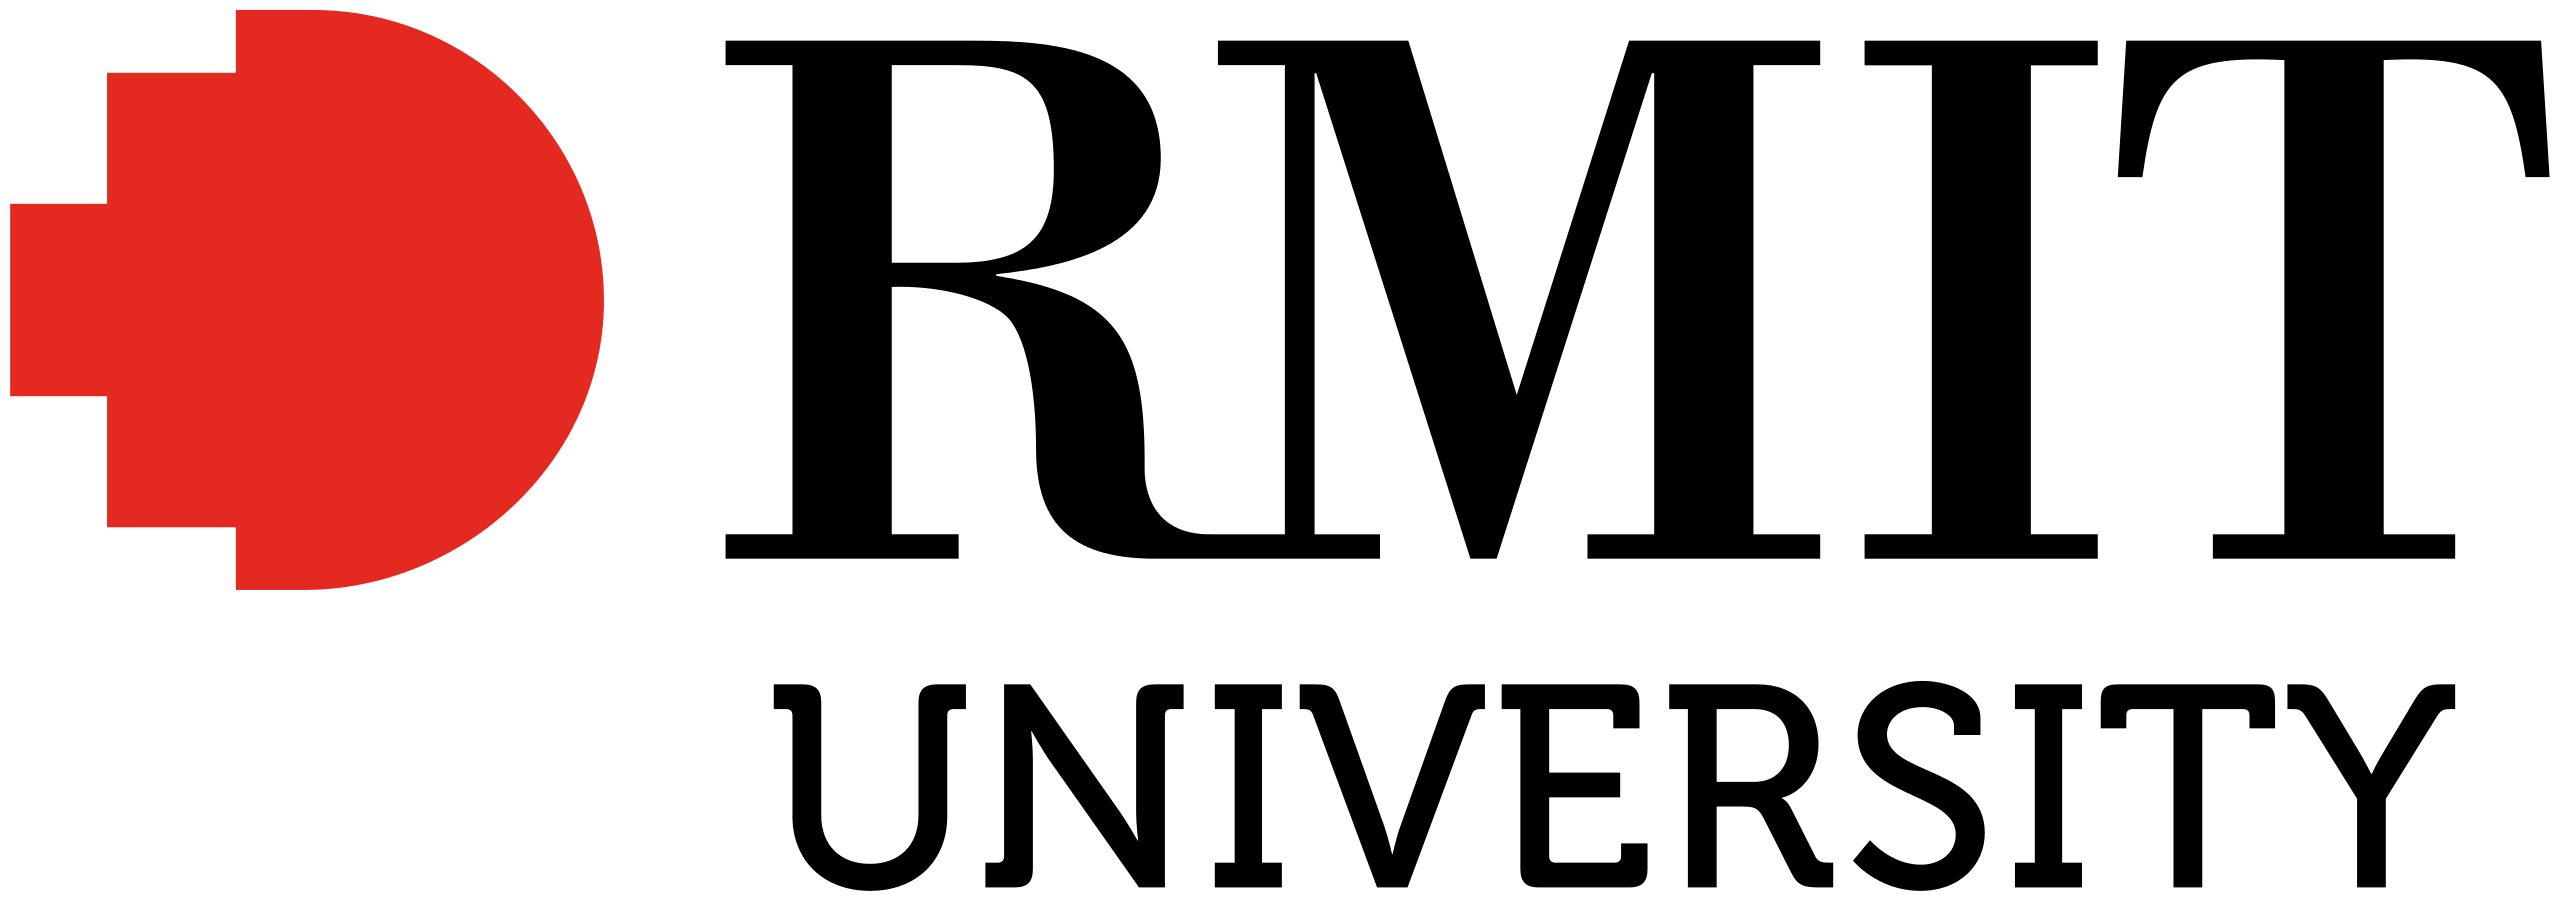 File:RMIT University Logo.svg - Wikipedia